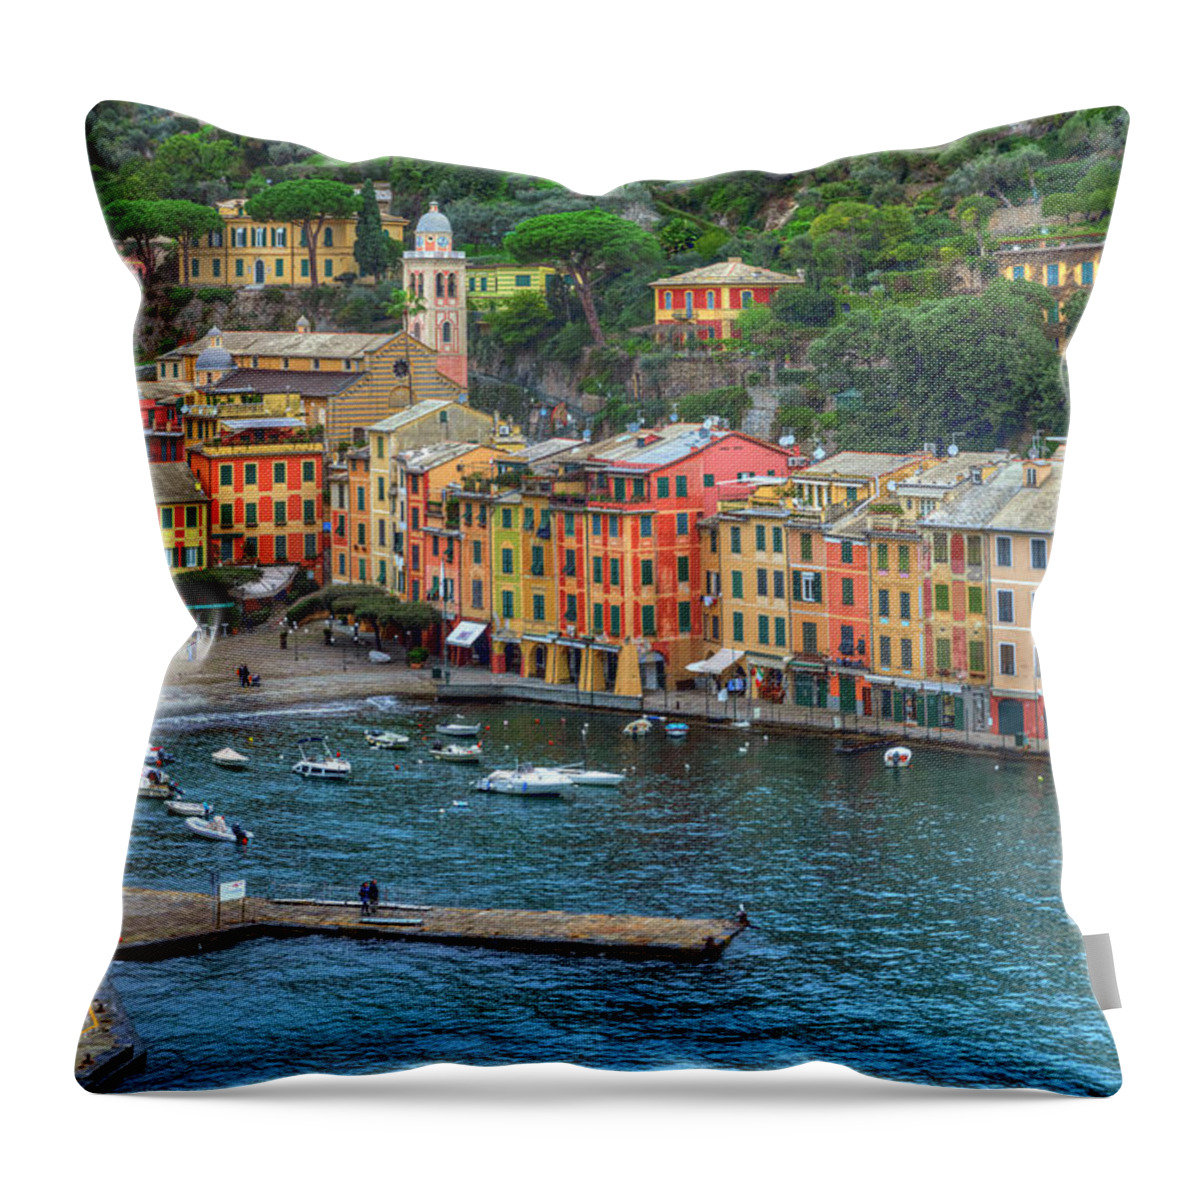 Portofino Throw Pillow featuring the photograph Portofino - Italy by Joana Kruse